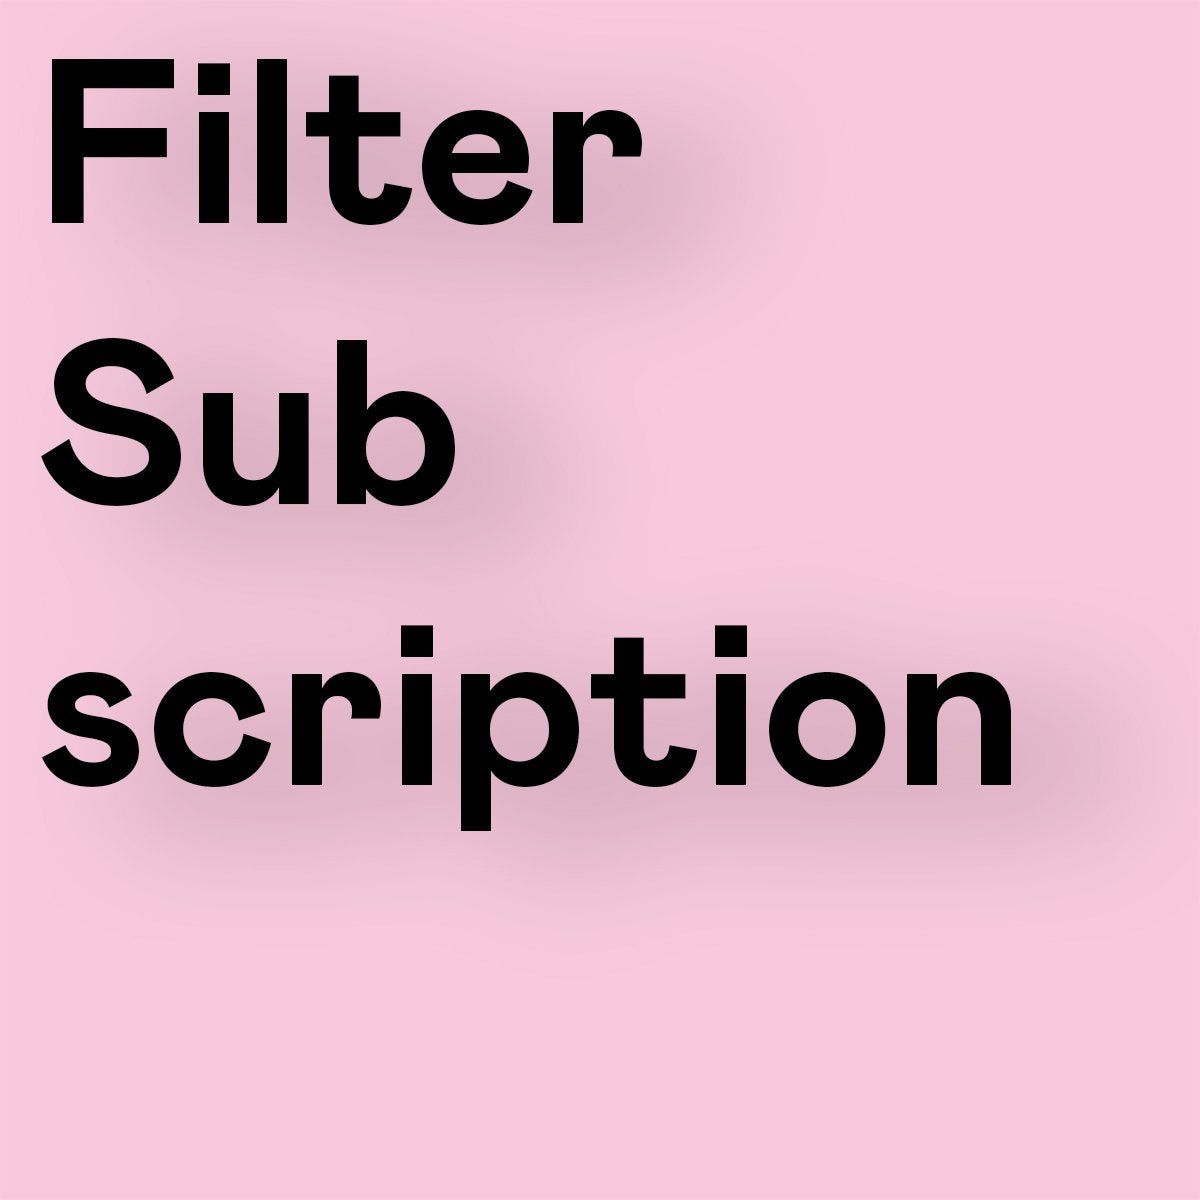 Filter Subscription